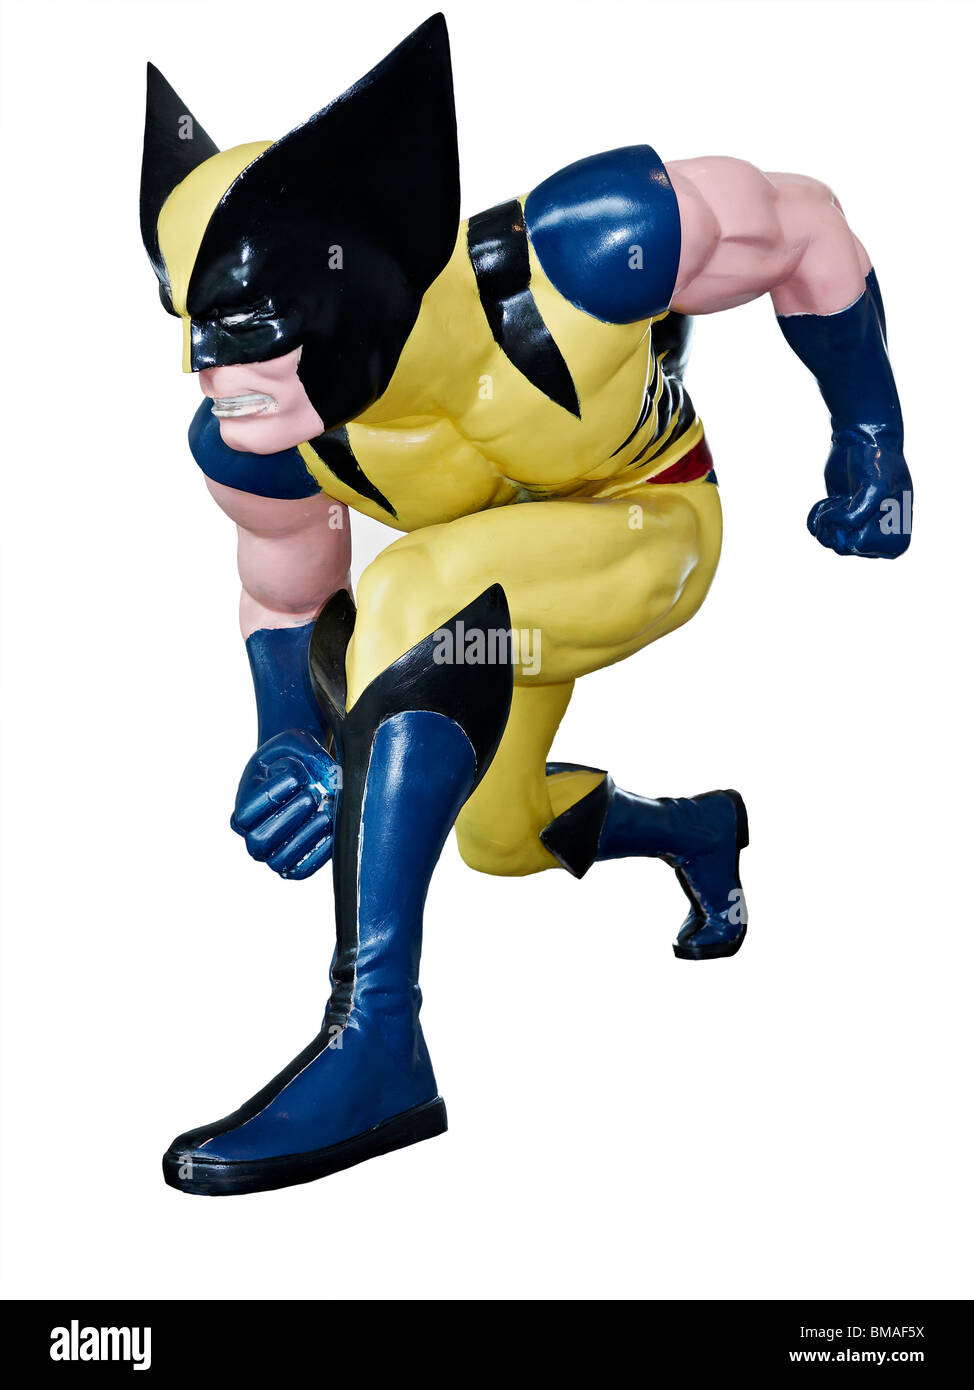 Wolverine super hero figure cutout against a plain white background Stock Photo